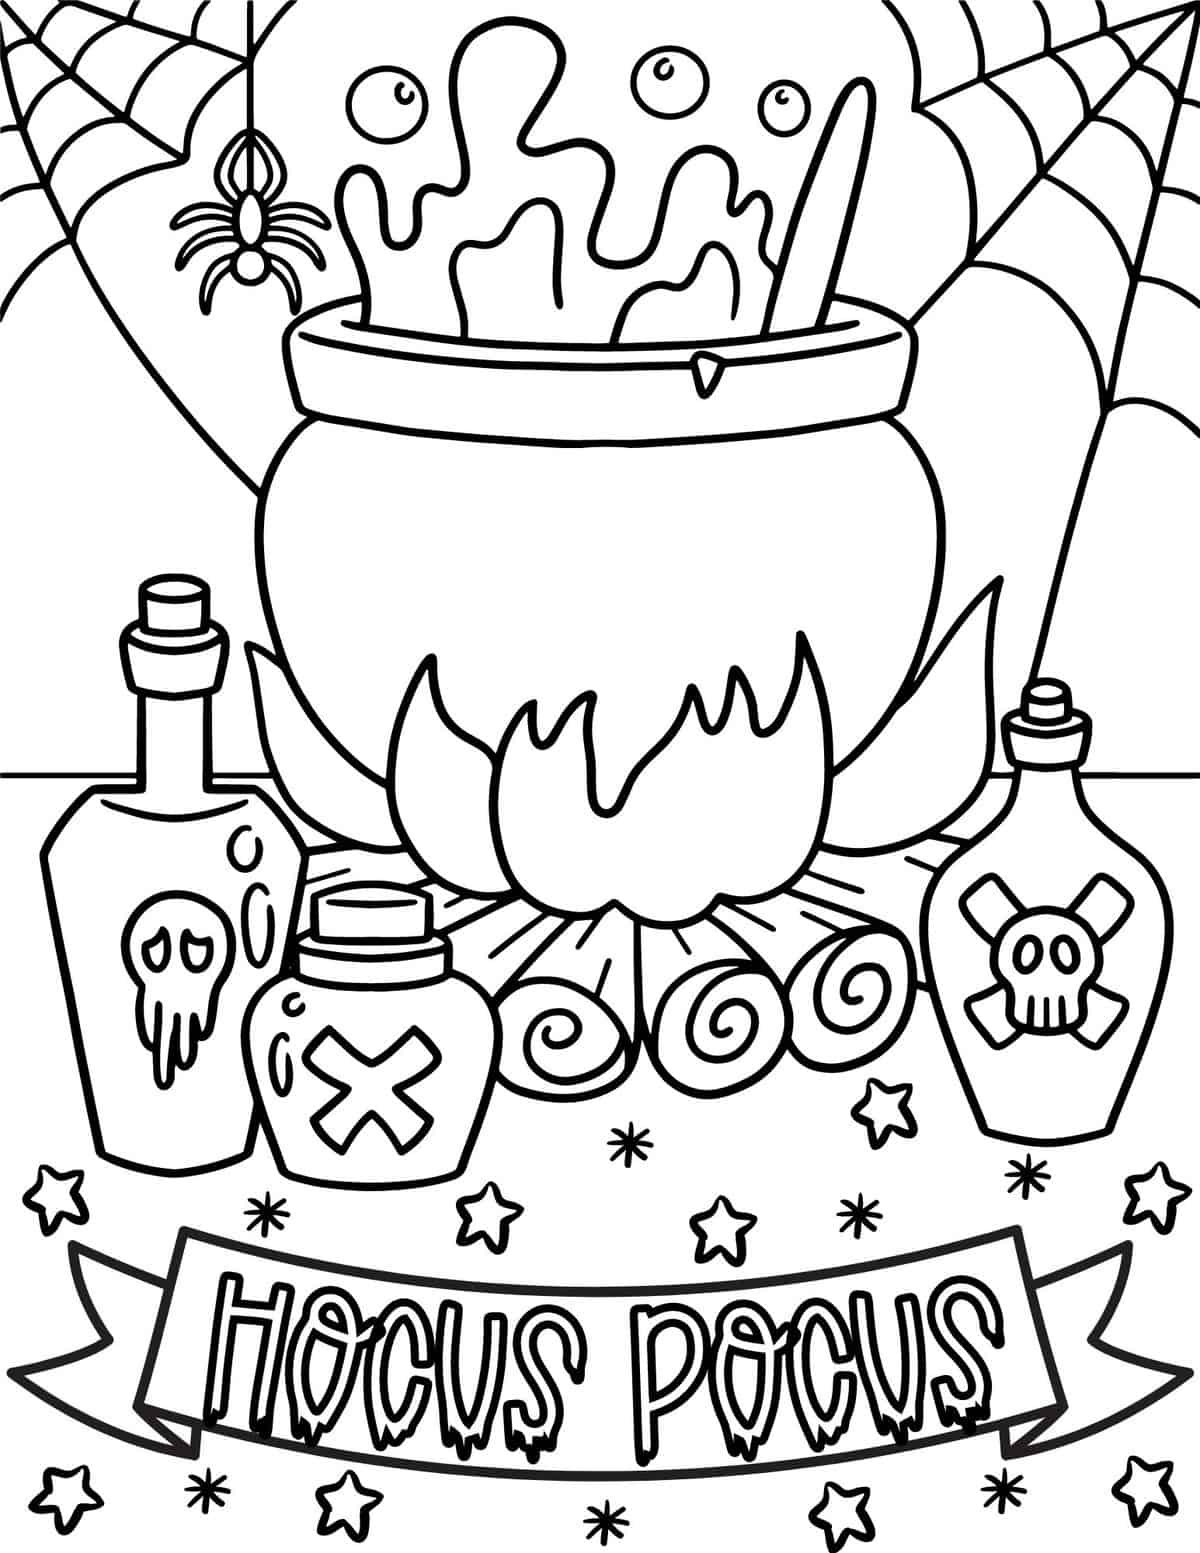 Hocus Pocus coloring page